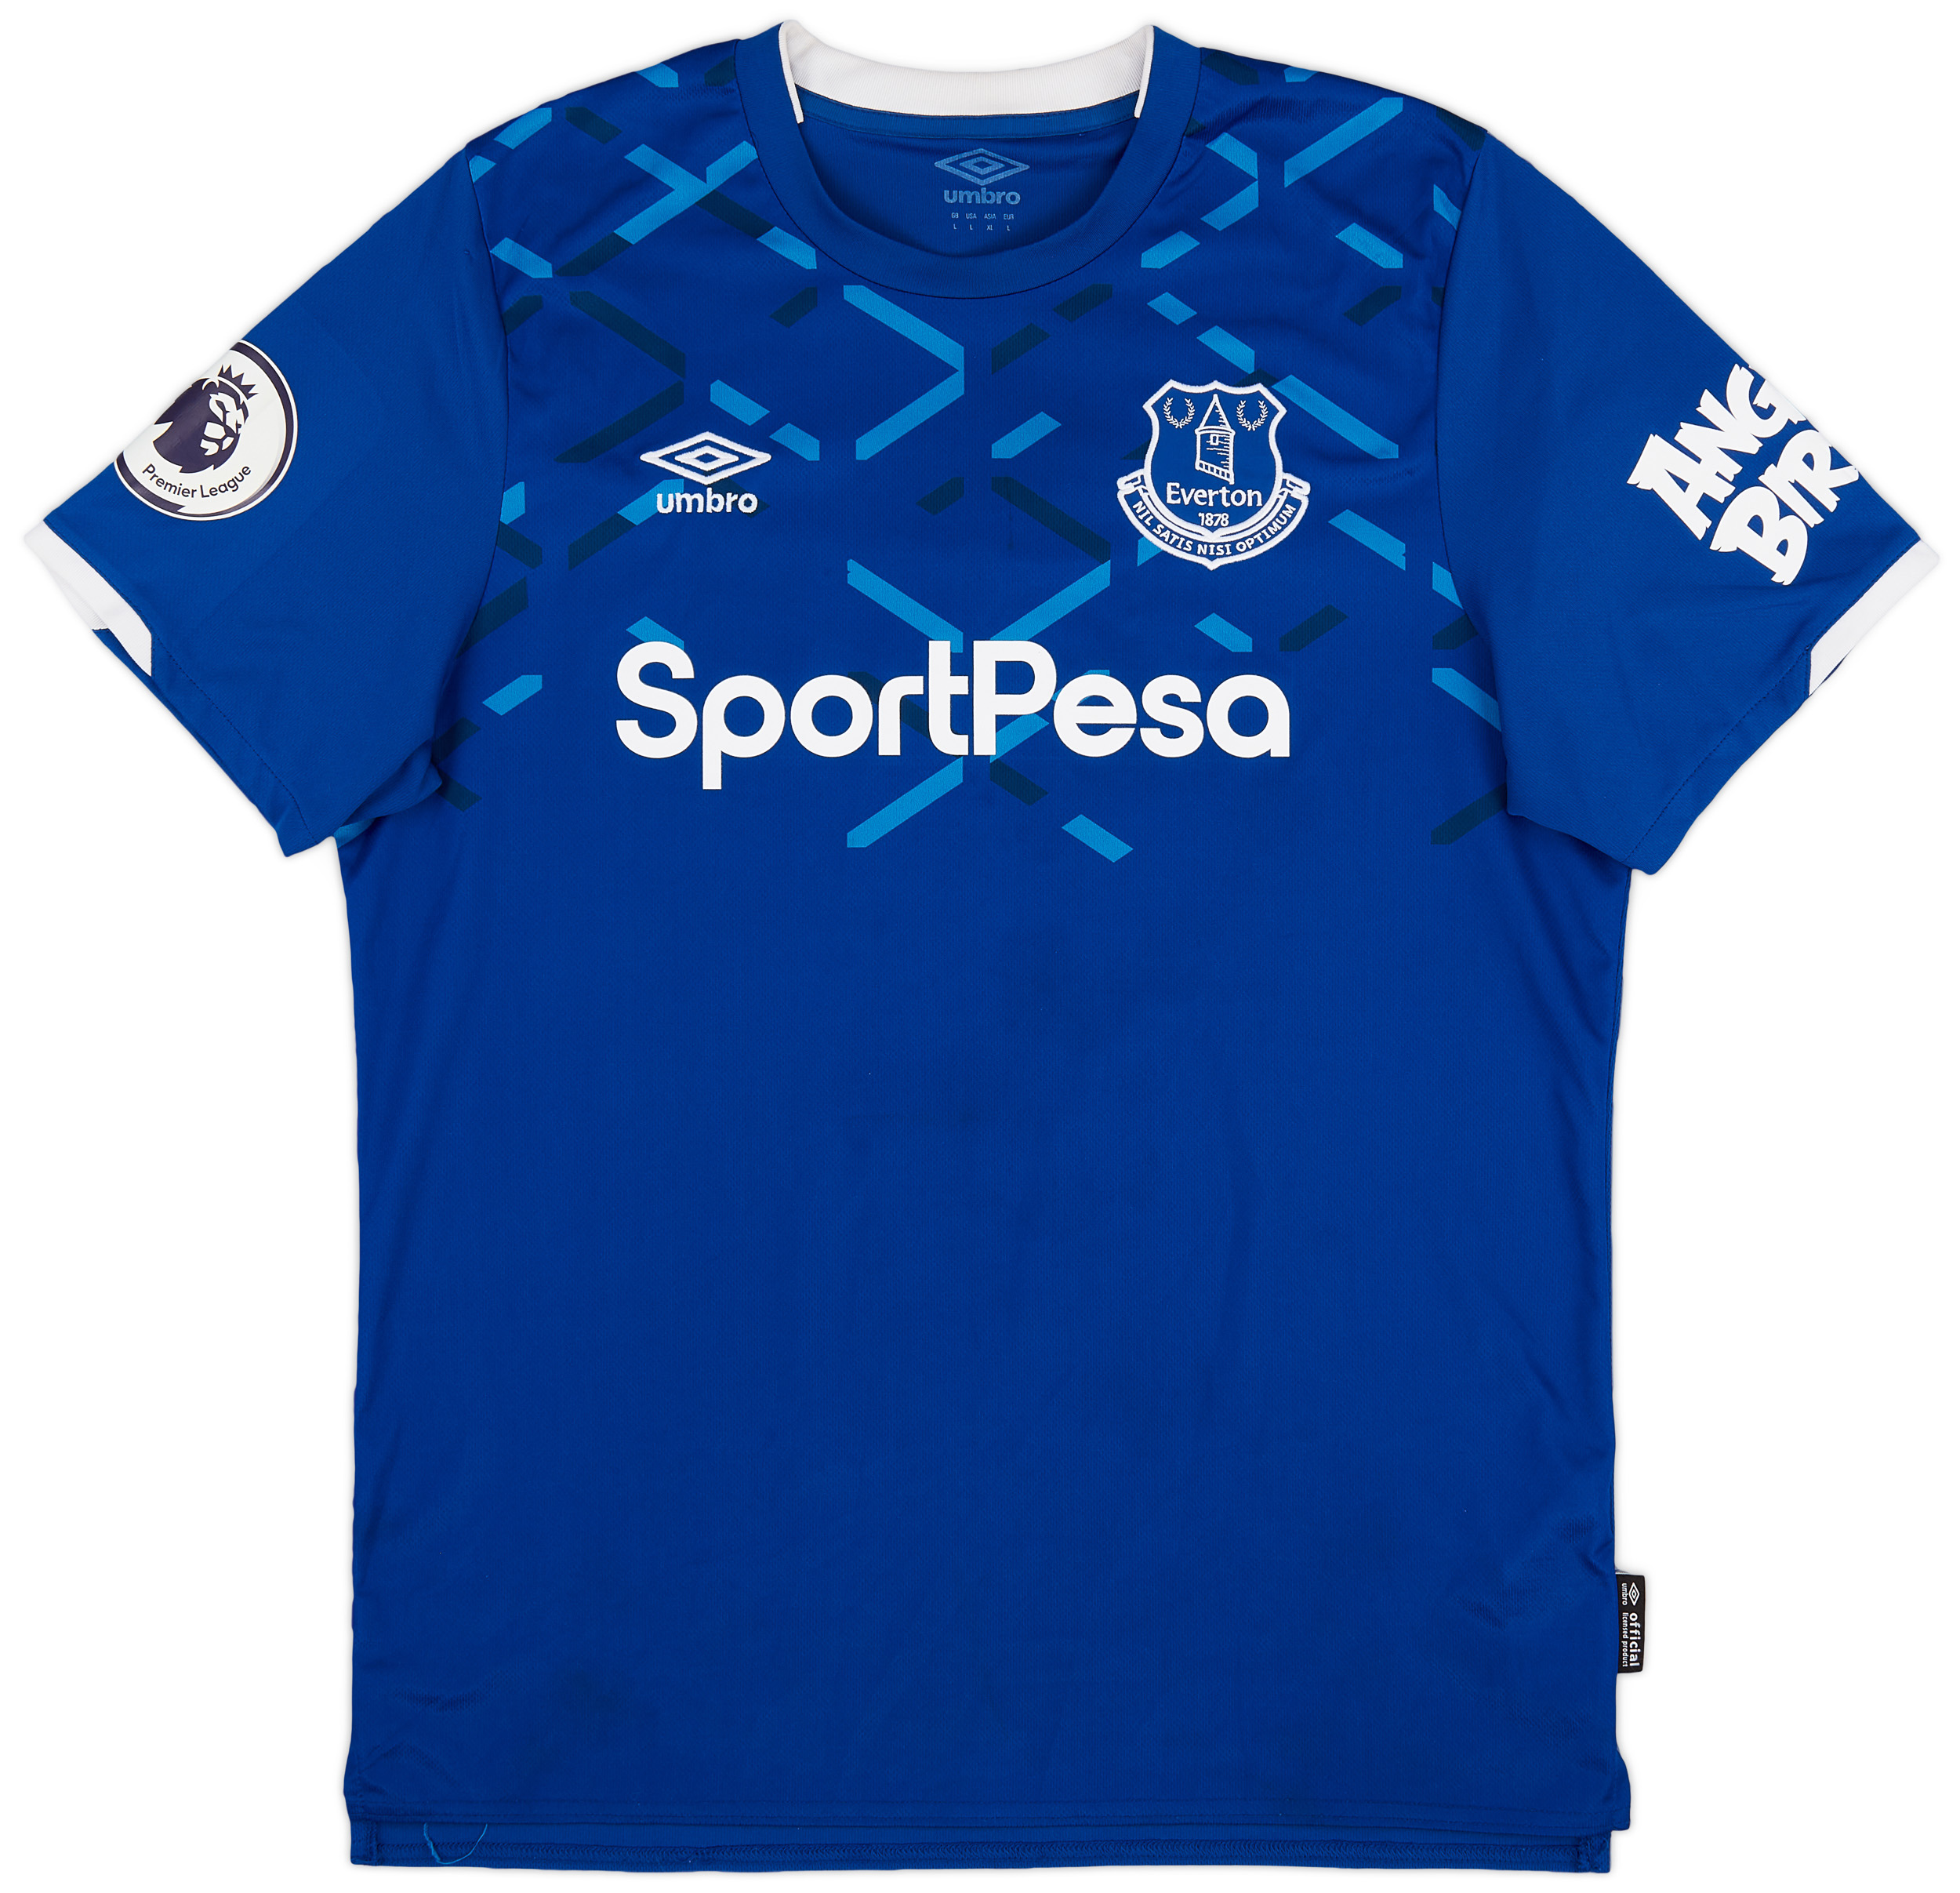 2019-20 Everton Home Shirt - 9/10 - ()